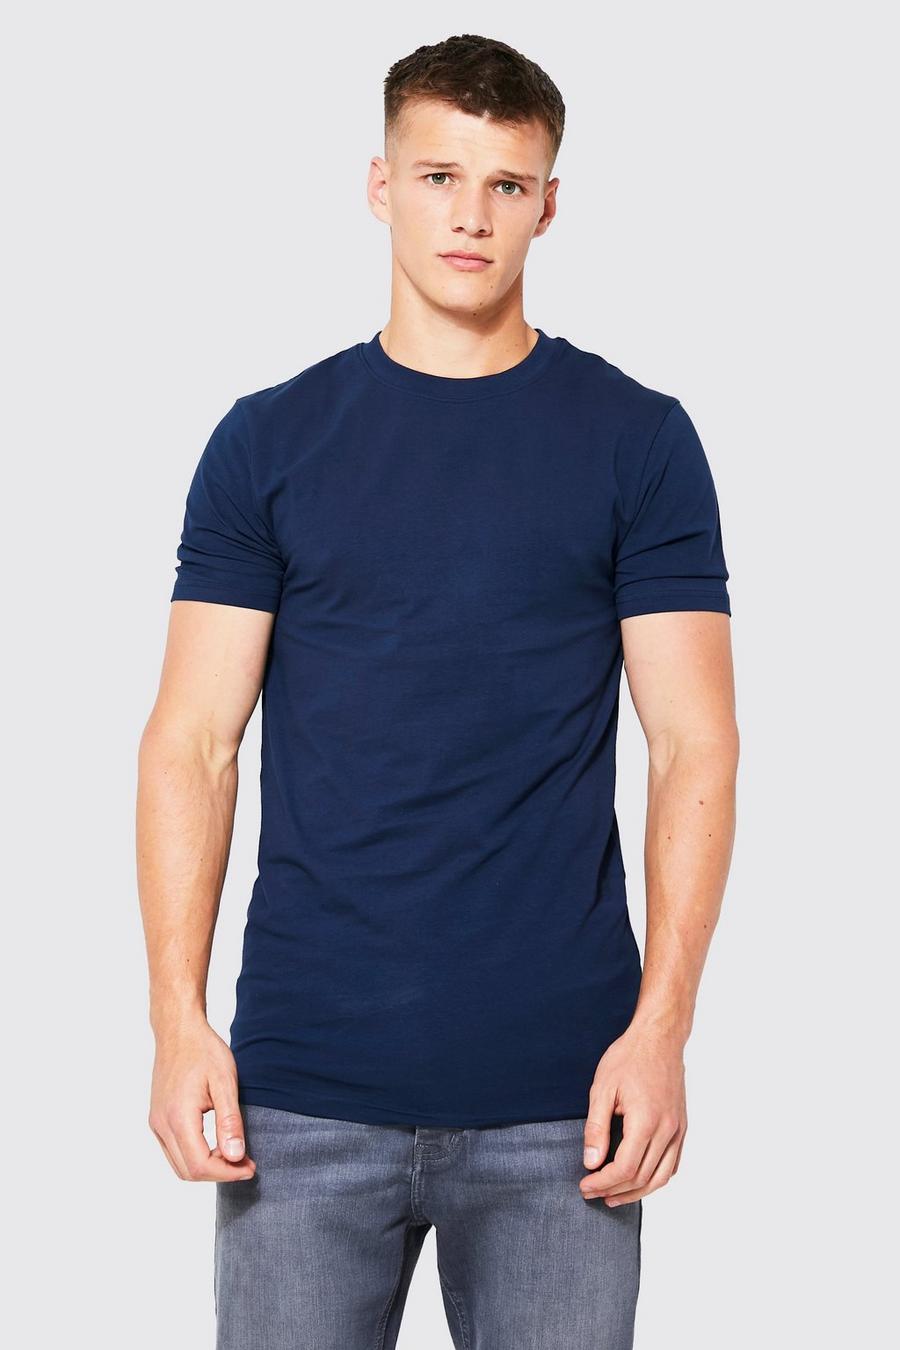 Tall - T-shirt moulant basique, Navy marine